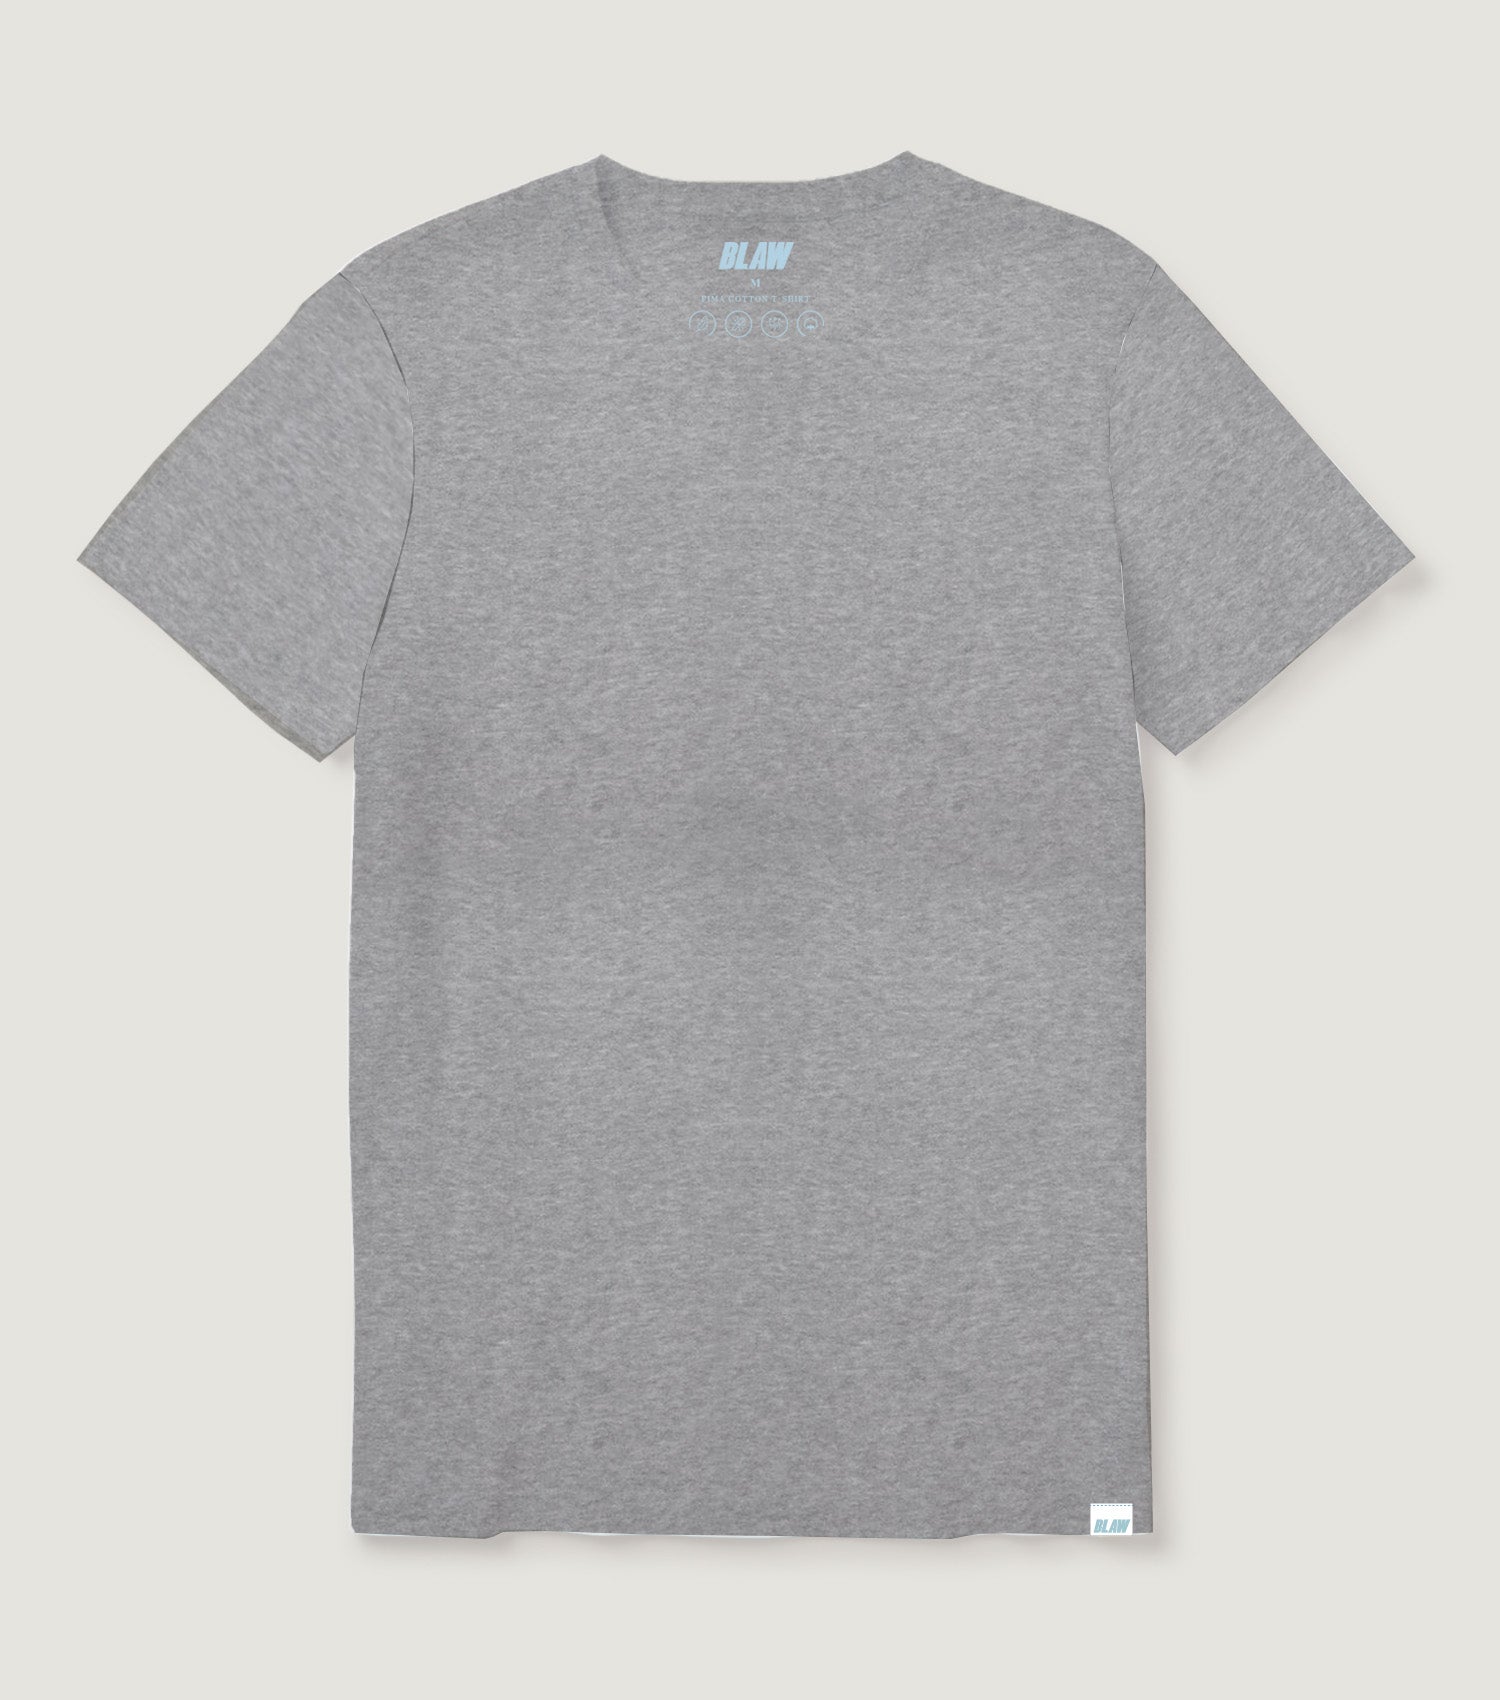 Basic Round Neck Pima Cotton T-shirt Grey - BLAW